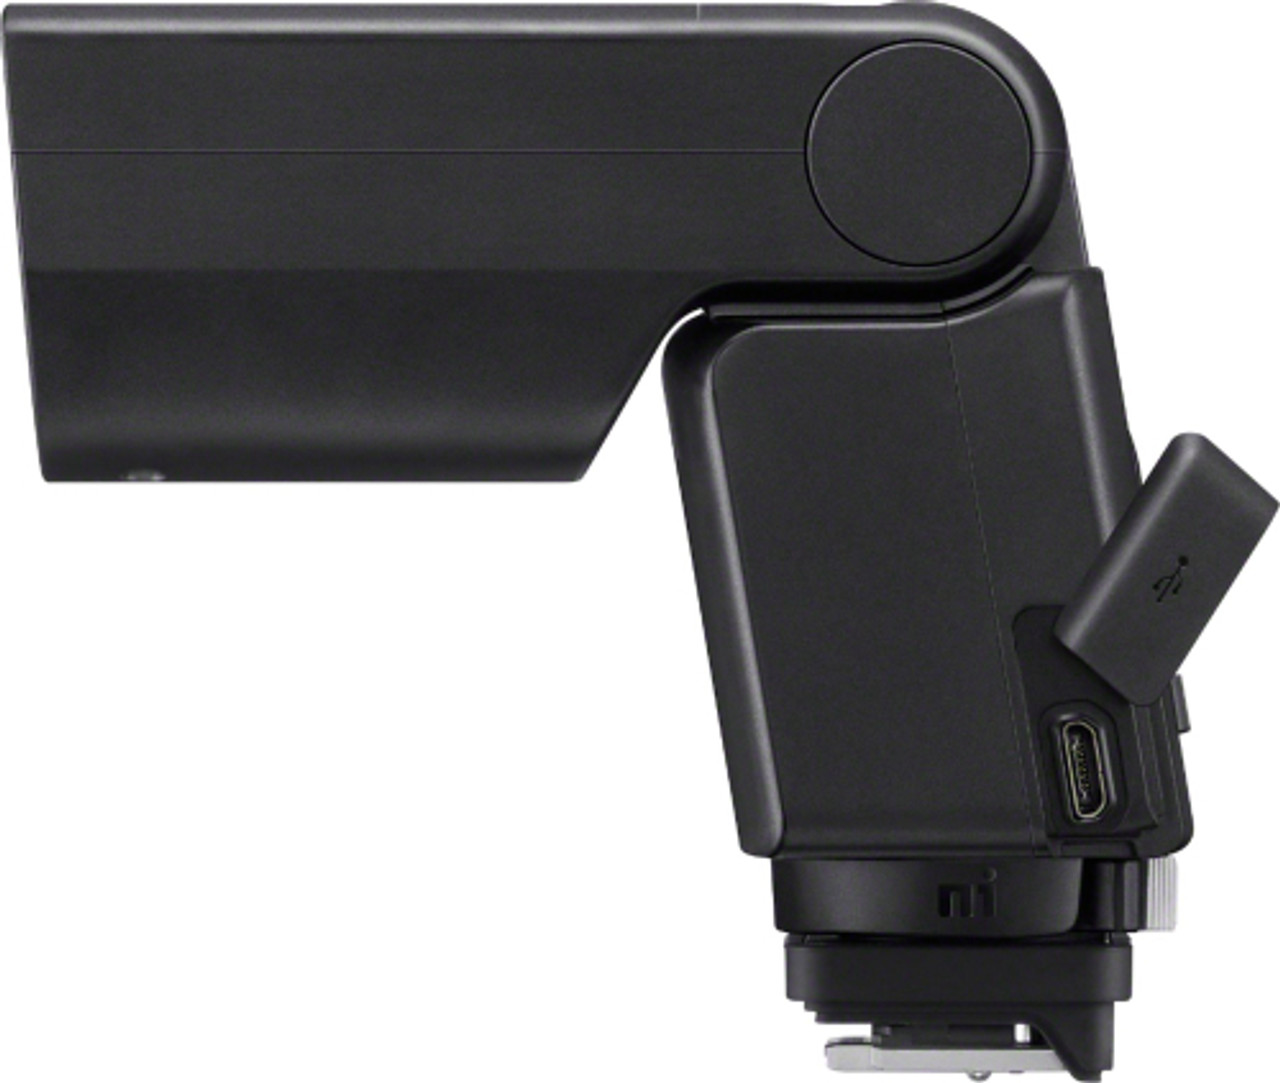 Sony - Alpha External Flash with wireless remote control